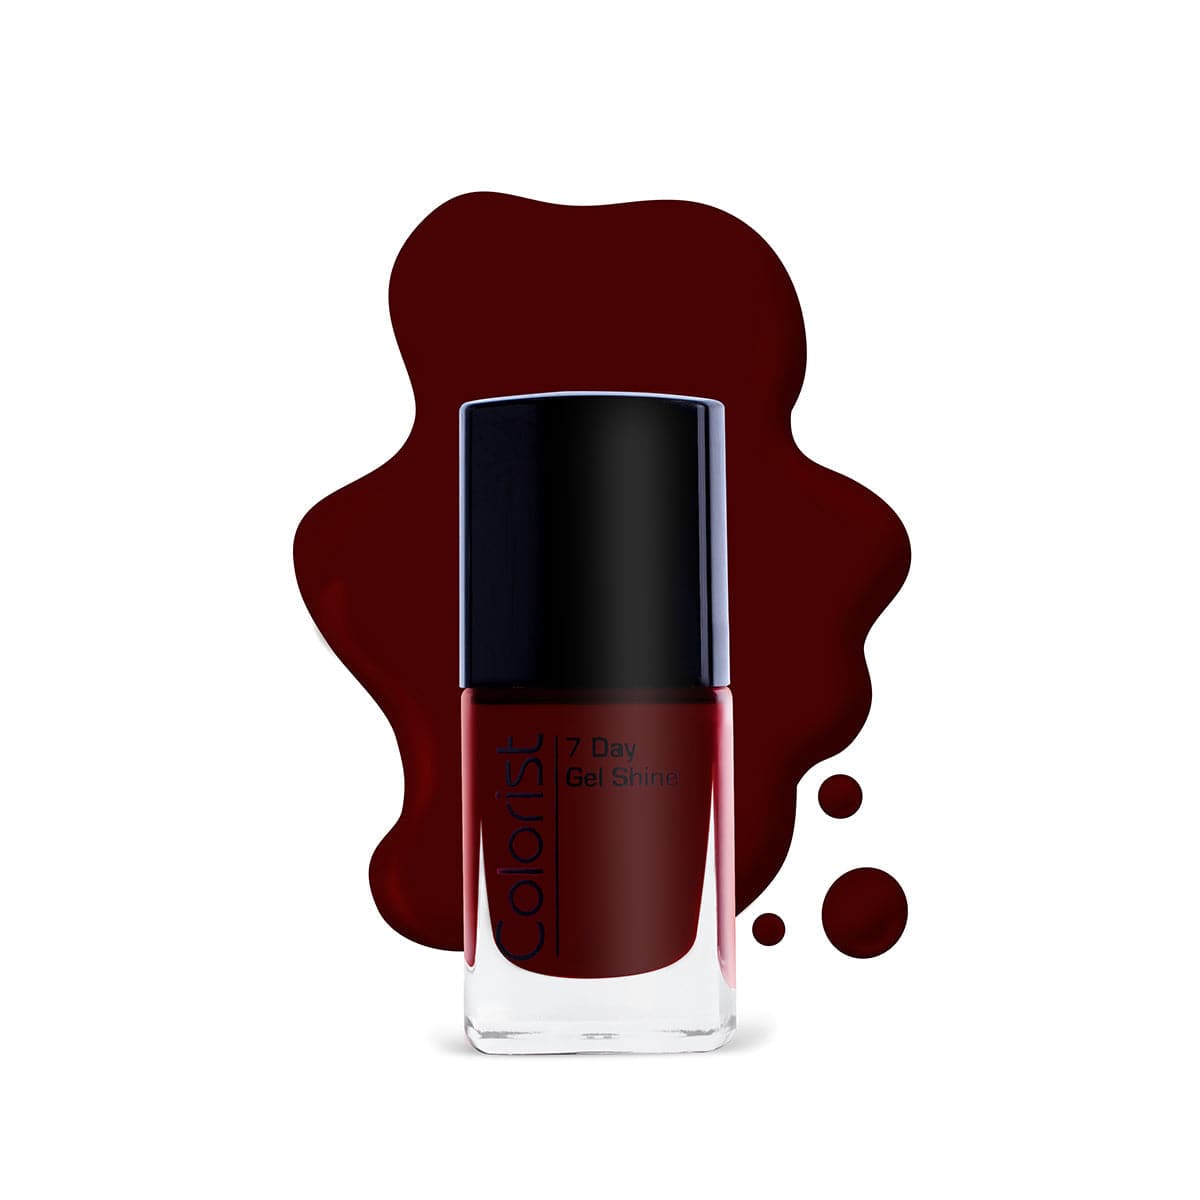 ST London Colorist Nail Paint - St004 True Blood - Premium Health & Beauty from St London - Just Rs 330.00! Shop now at Cozmetica